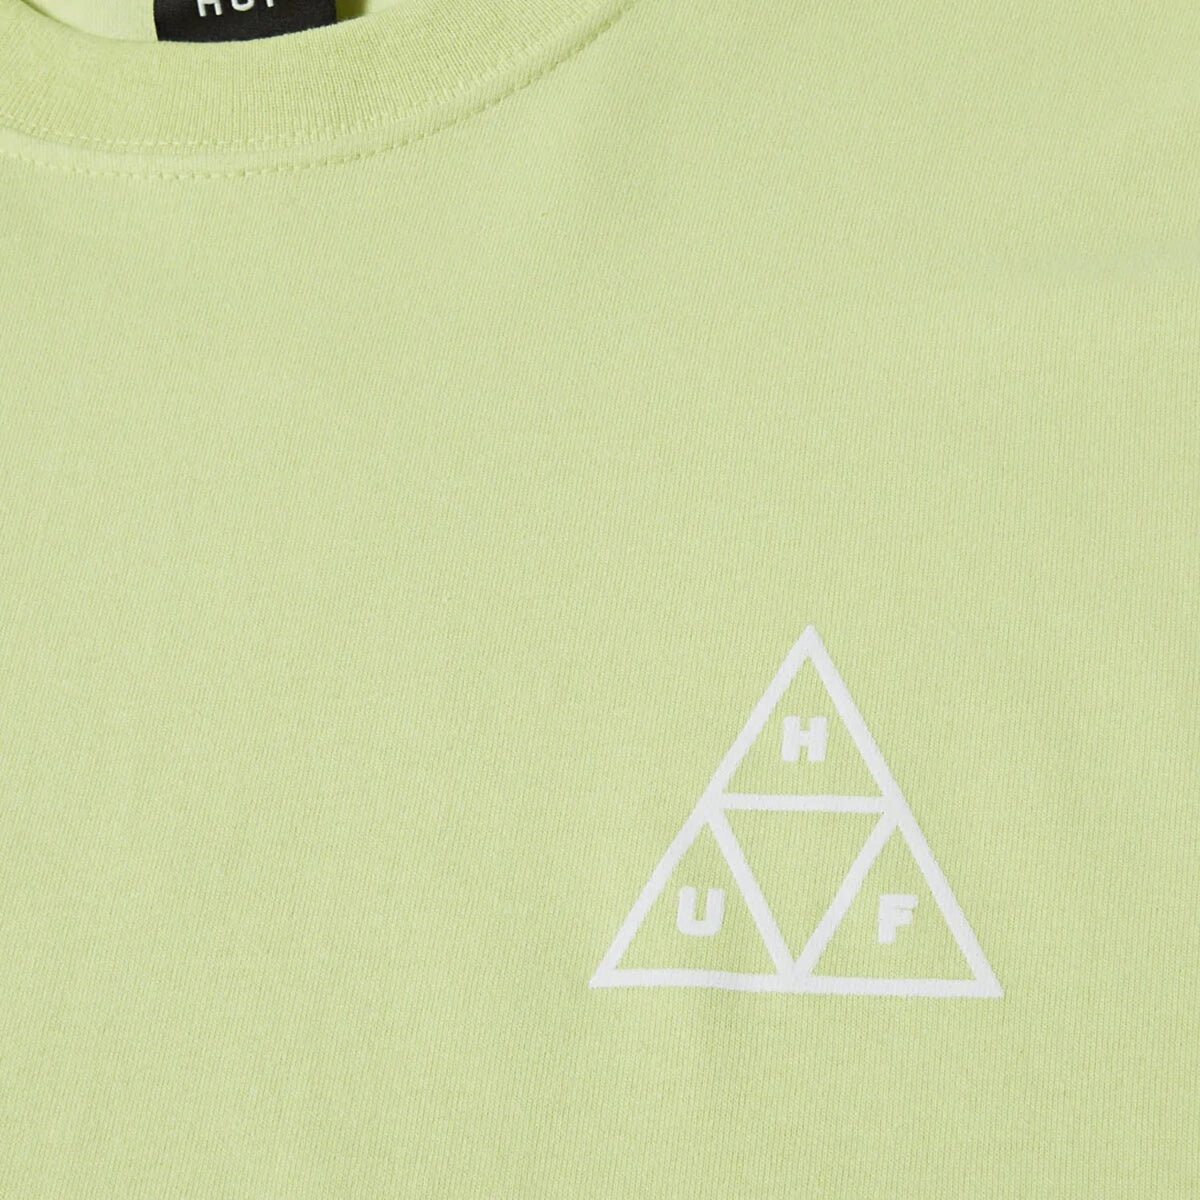 Huf Set TT Triple Triangle Longsleeve T-Shirt - Lime - Mens Graphic T-Shirt by Huf